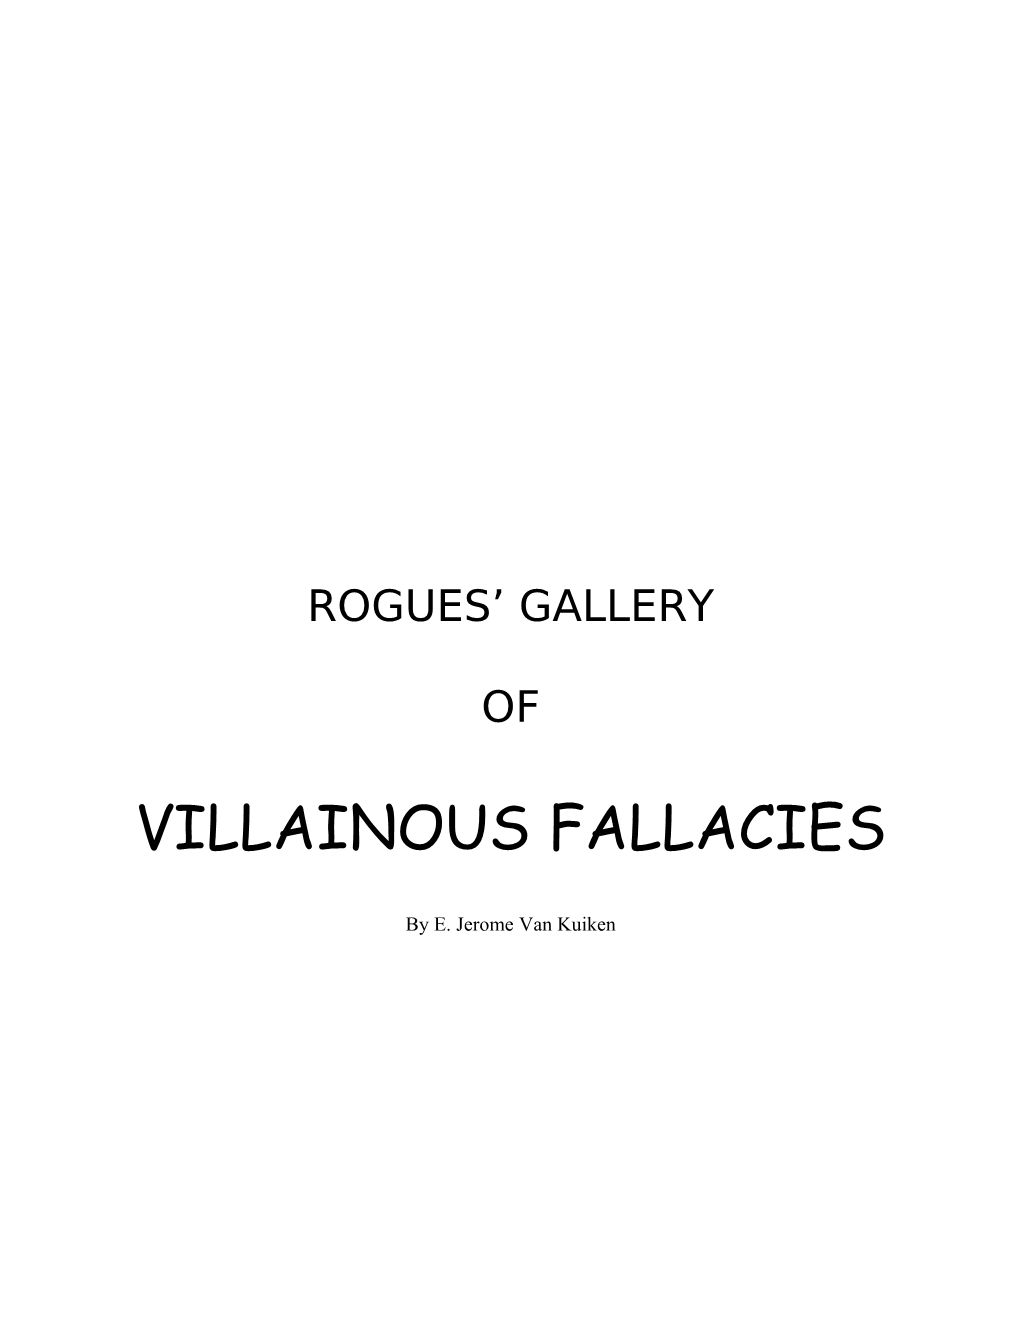 Rogues Gallery of Villainous Fallacies